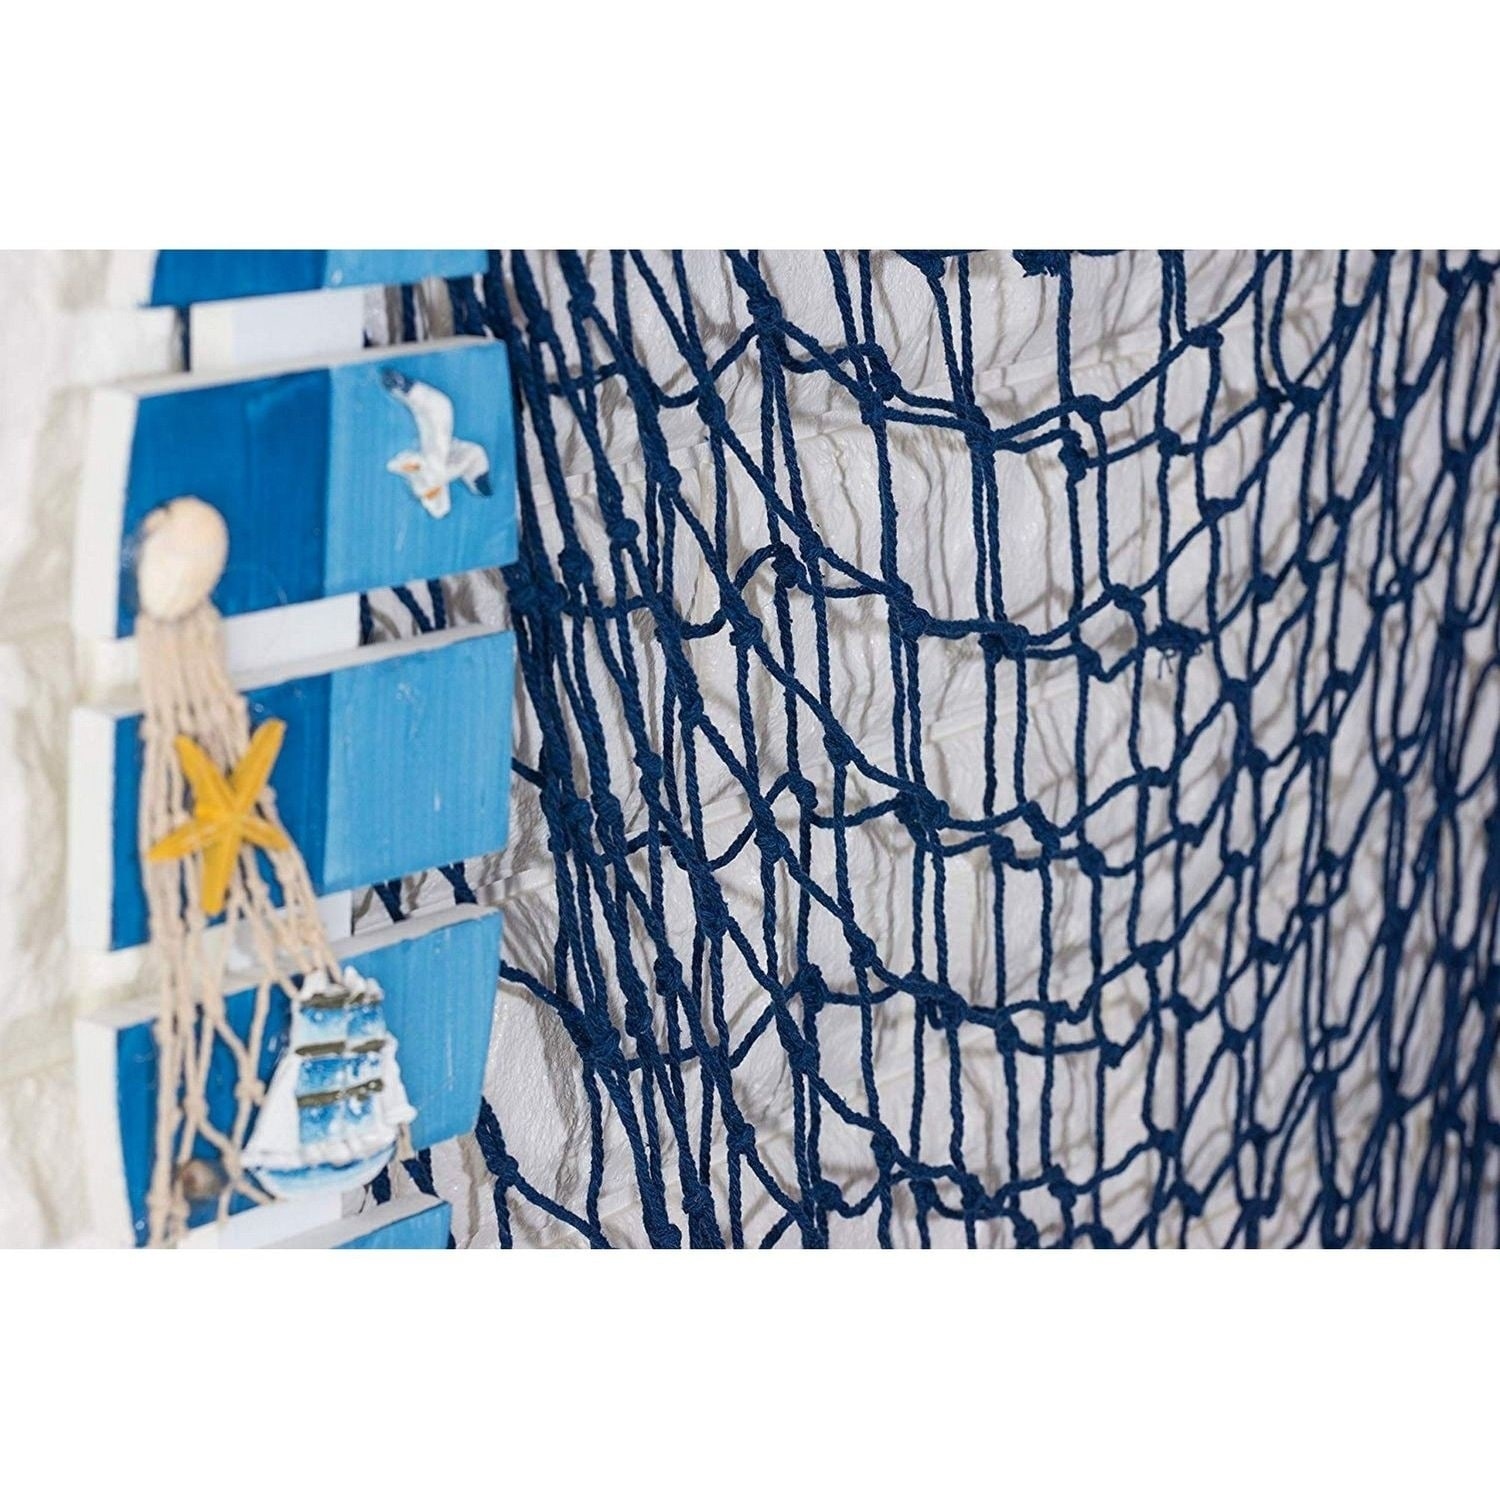 YOAYO Decorative Fish Net, Nautical Fishing Net Decoration for Party,Wall, Blue,200x150cm